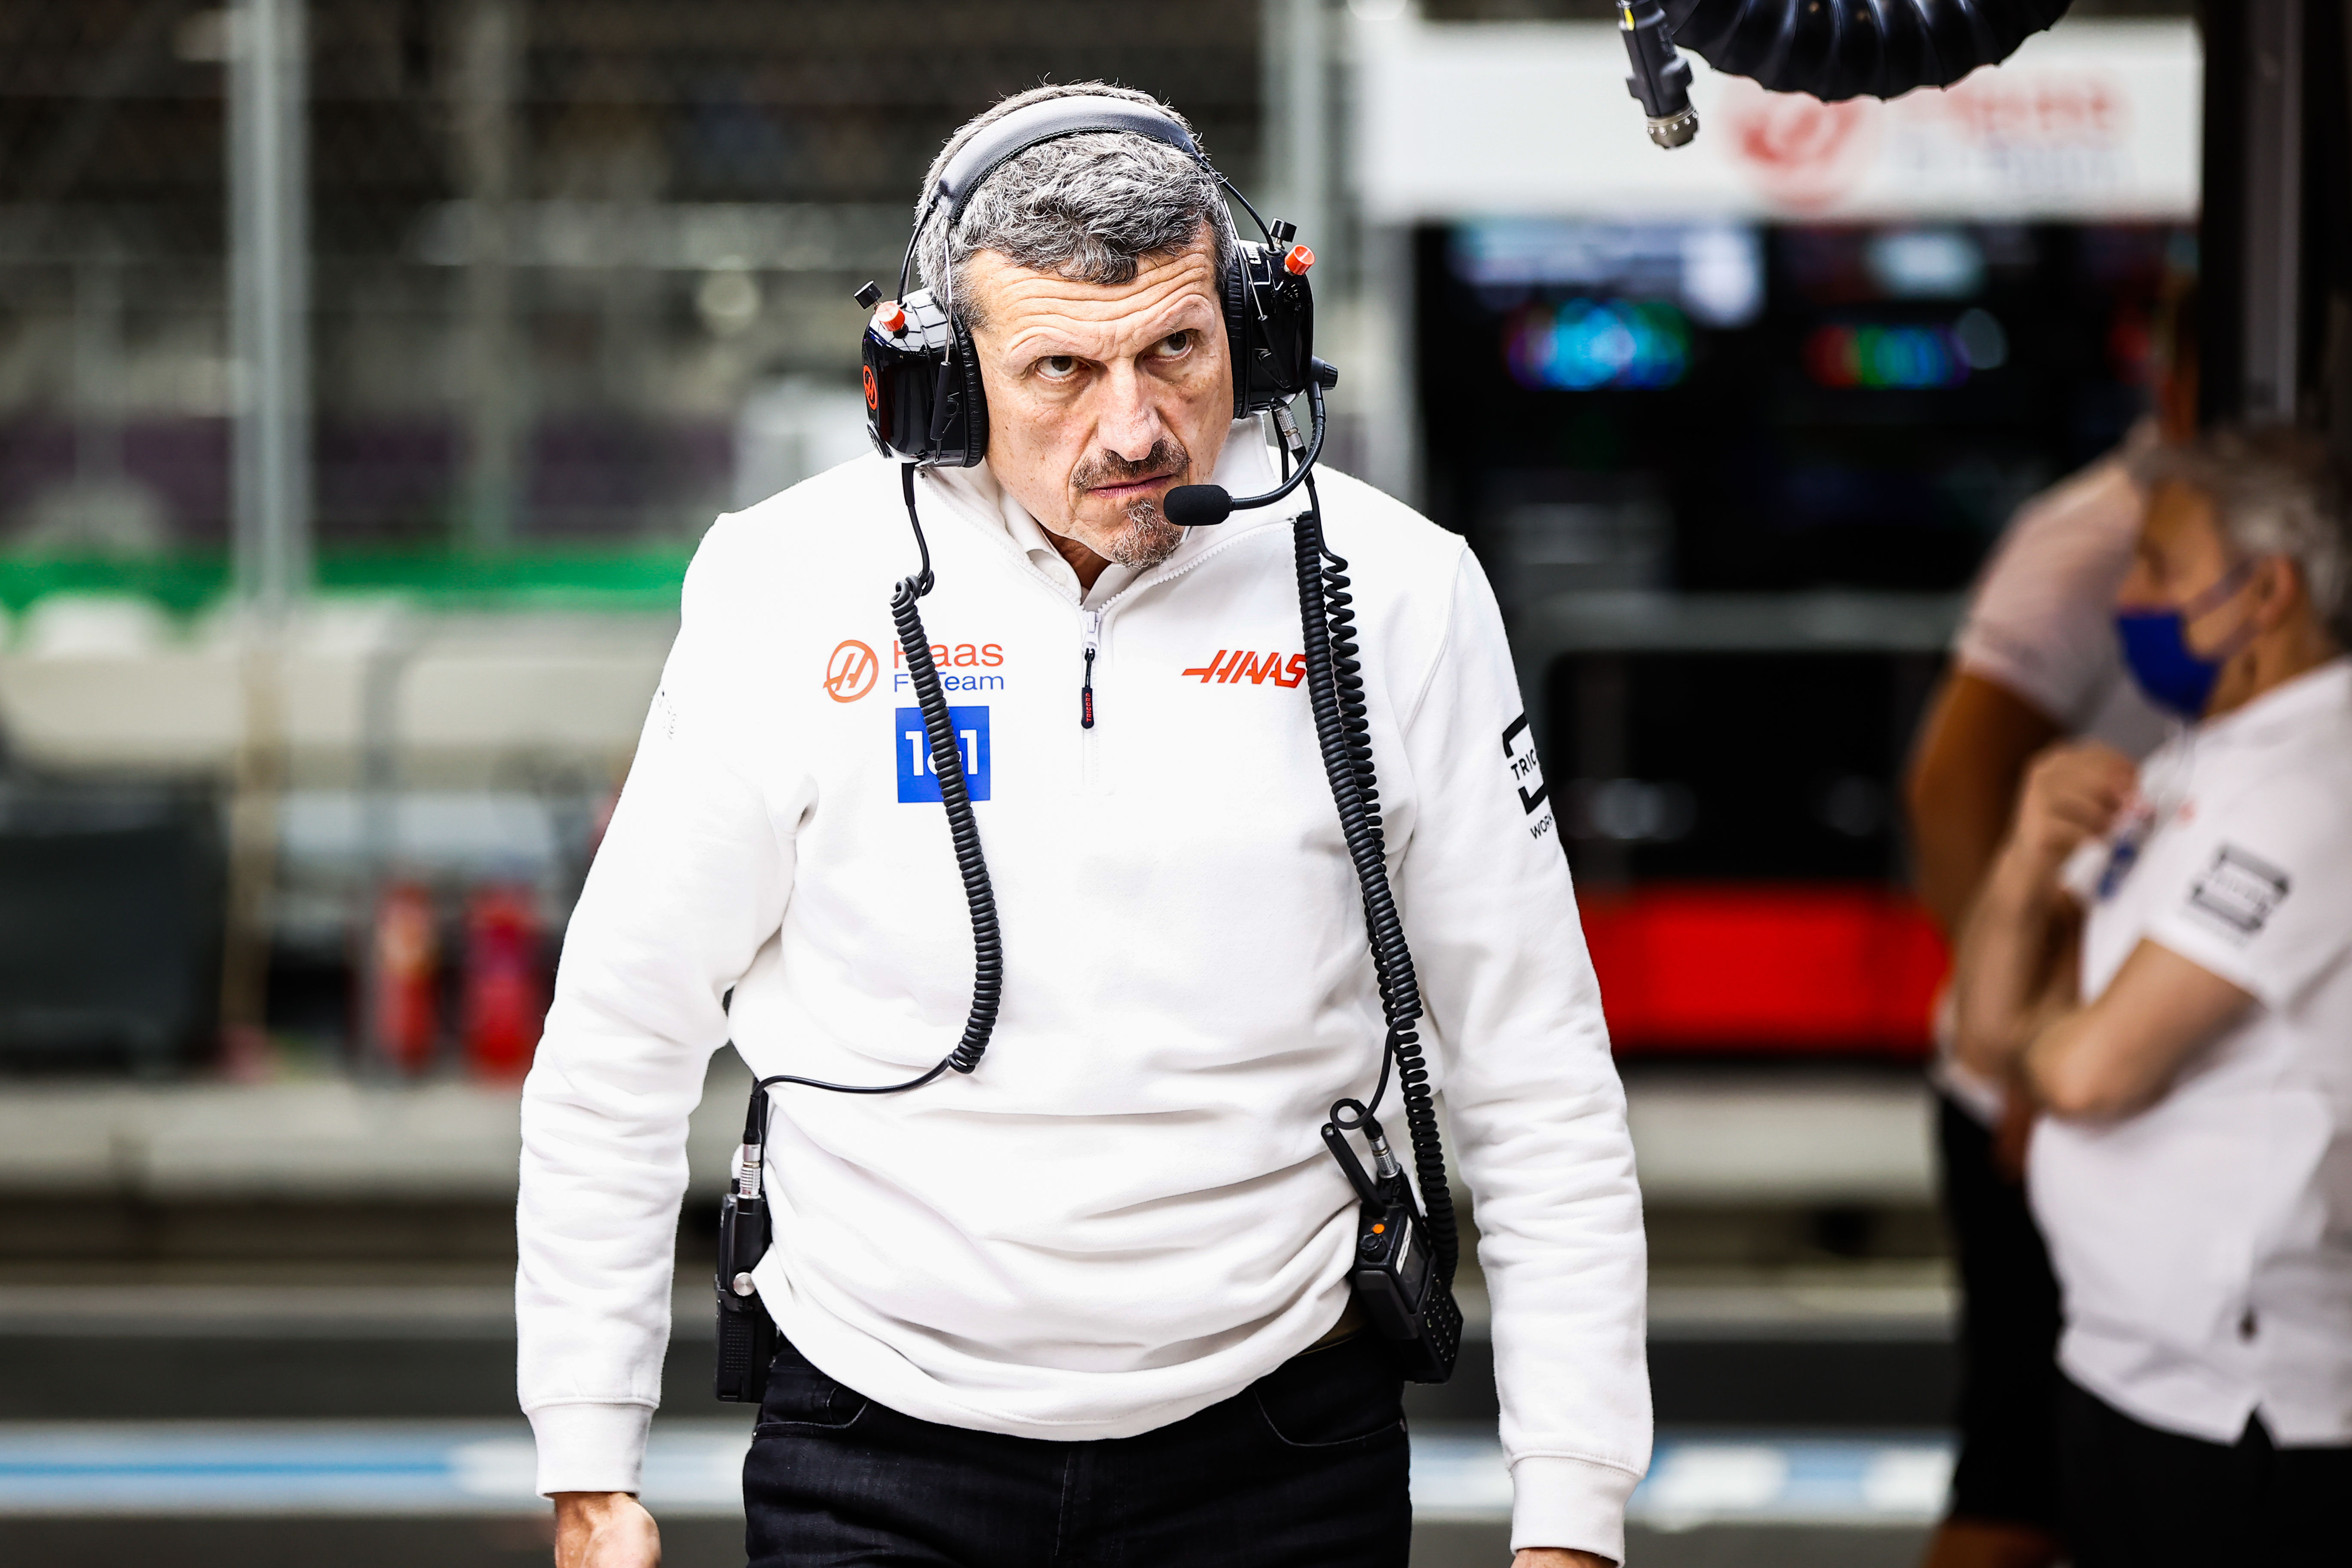 Haas F1 Team principal, Guenther Steiner